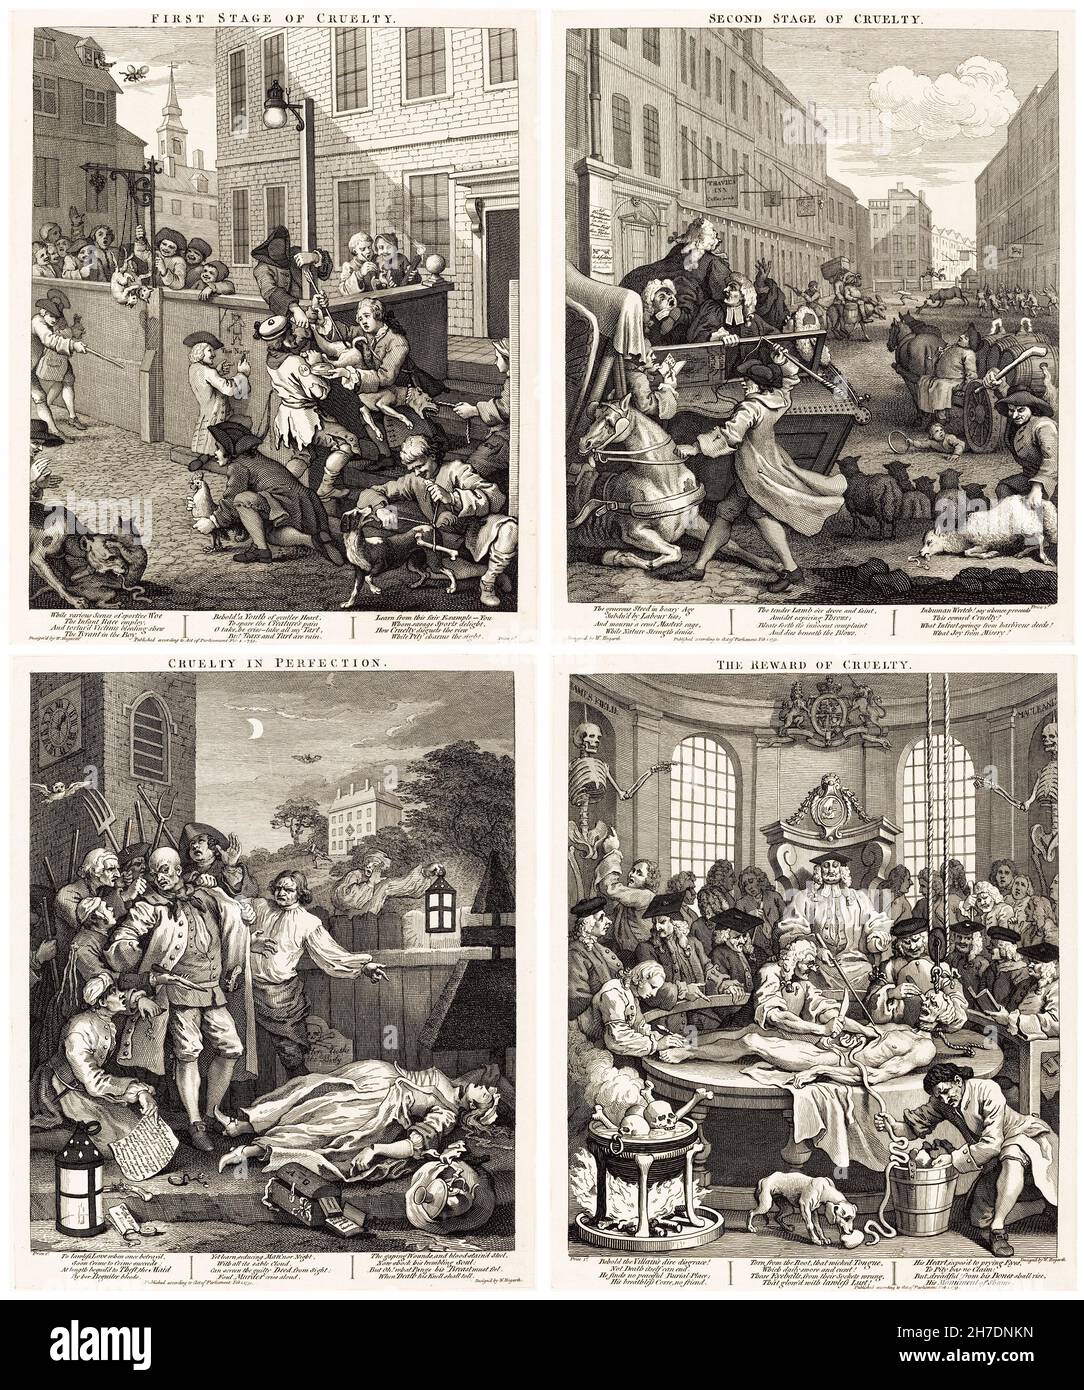 Les quatre étapes de la cruauté, gravure de William Hogarth, 1751 Banque D'Images